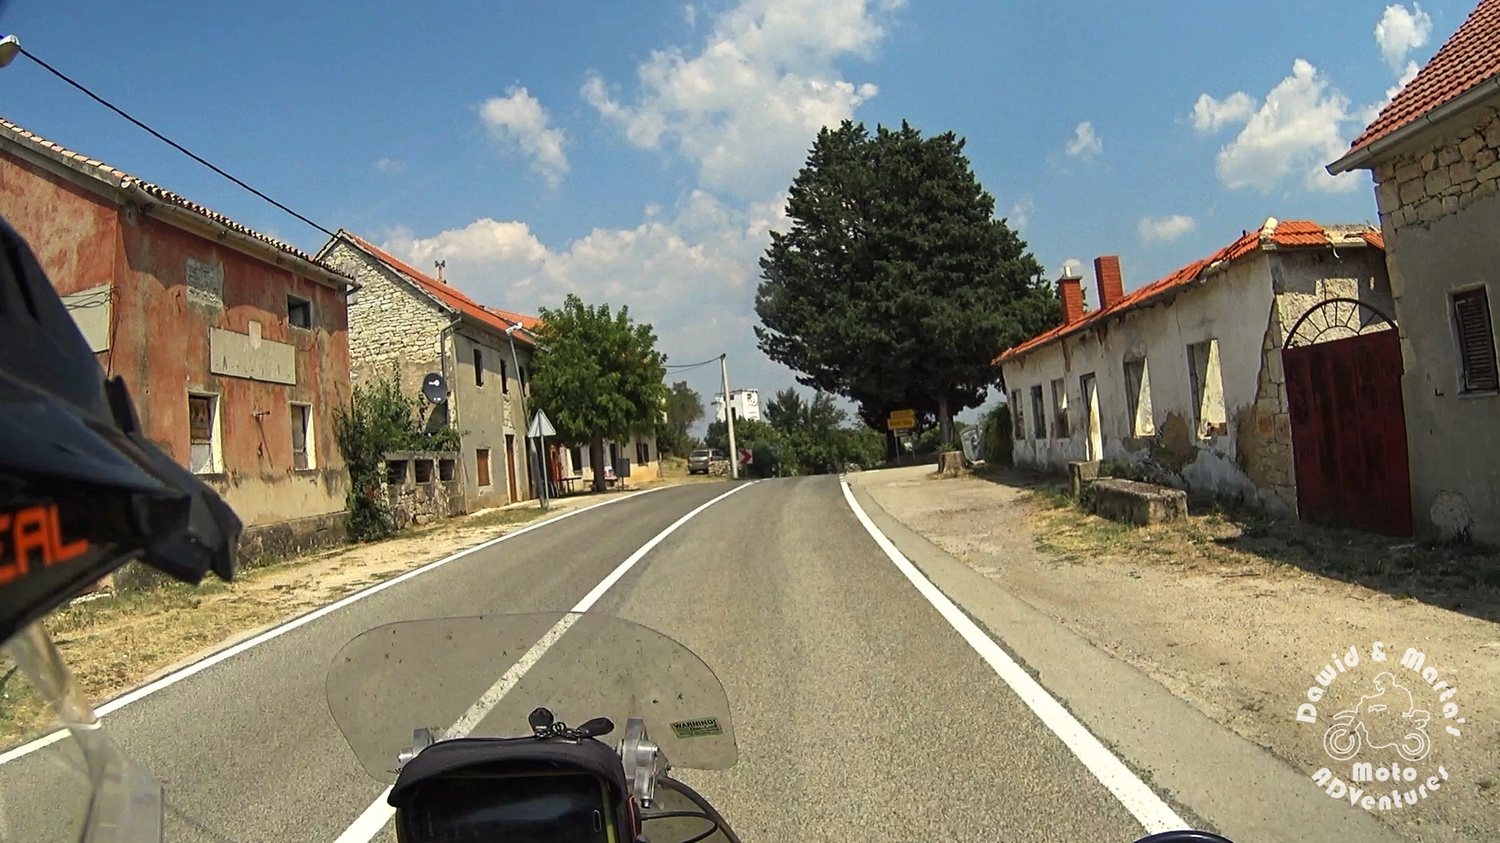 Road 1 Kistanje, inland Croatia